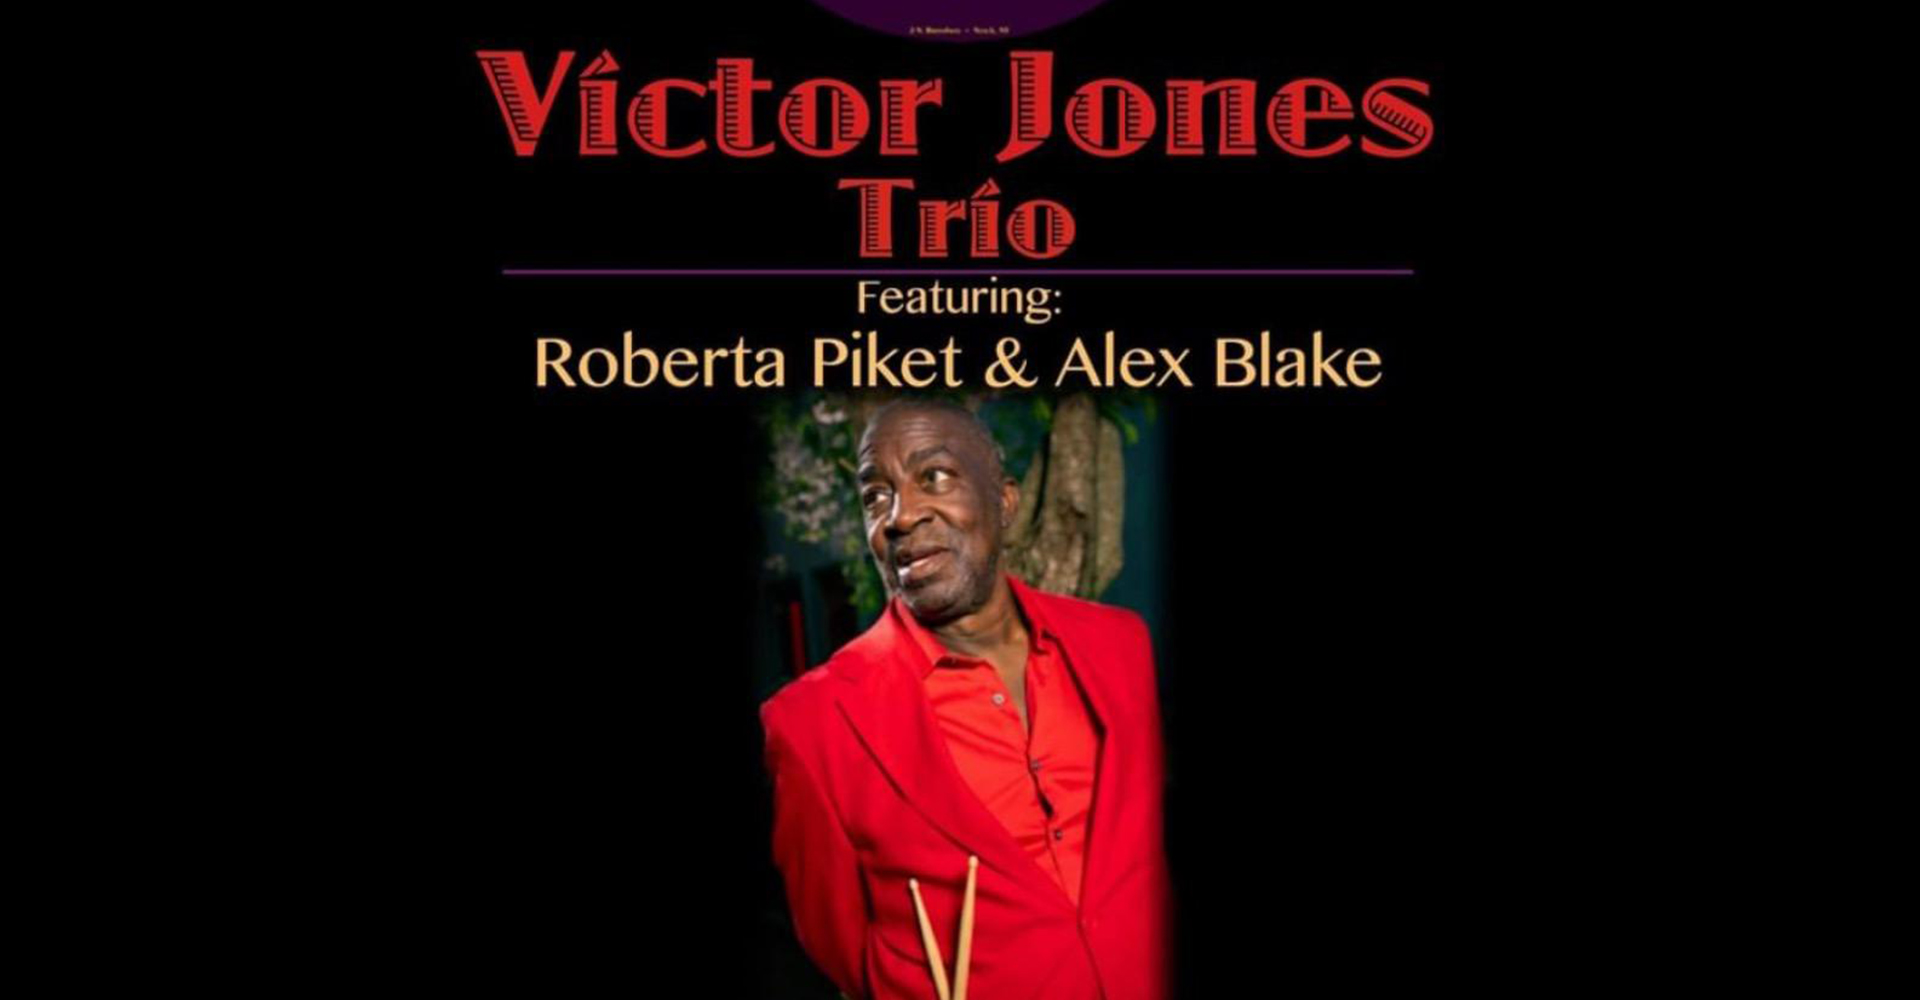 The Victor Jones Trio